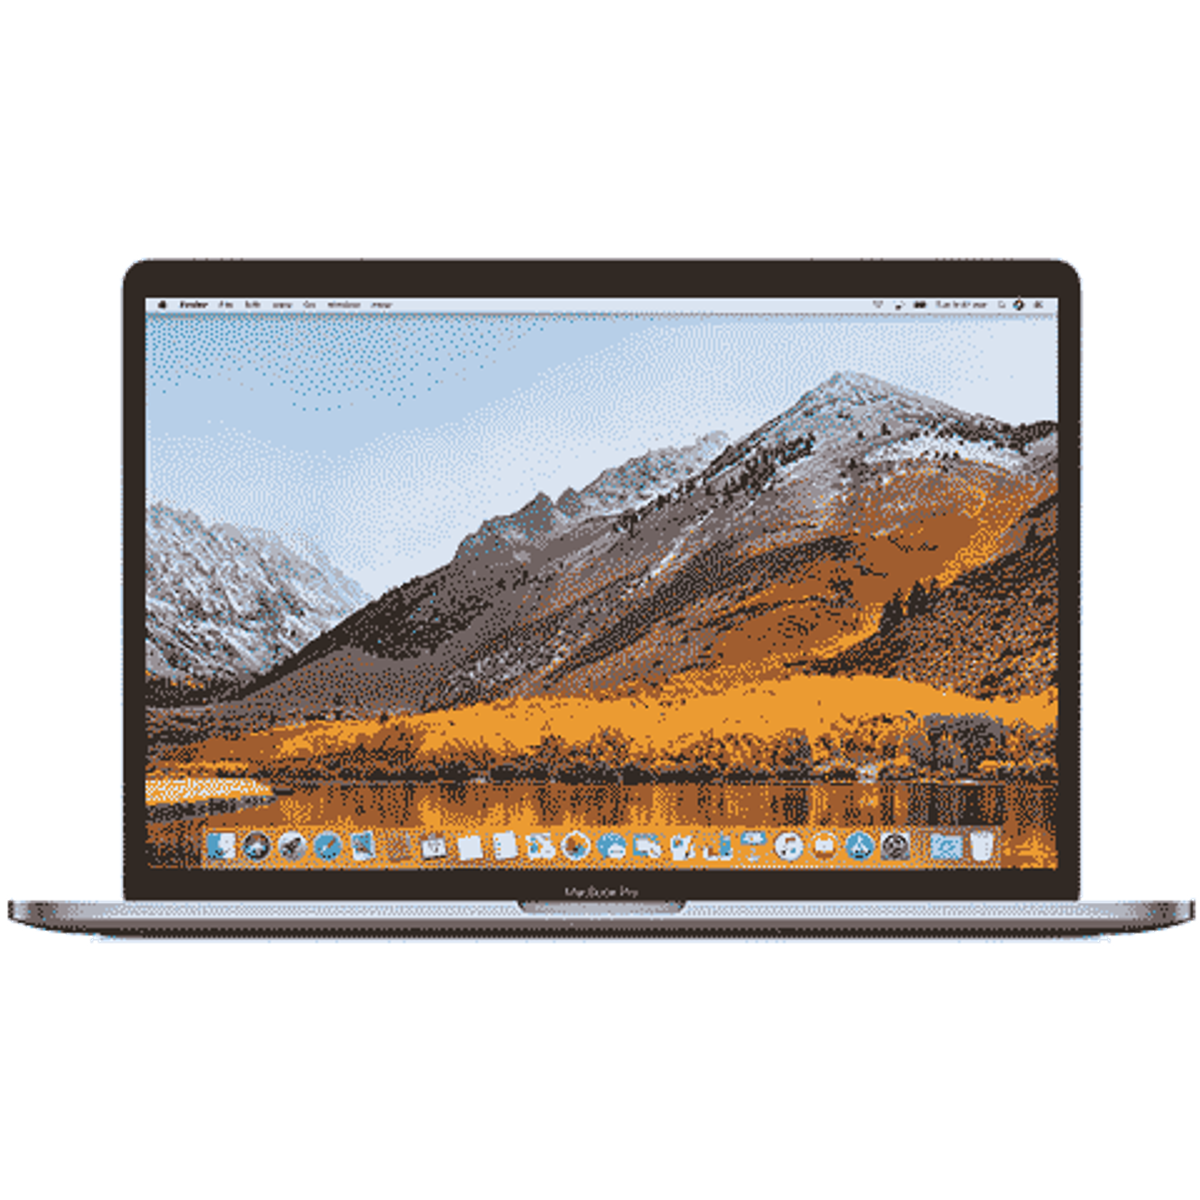 एप्प्ल Macbook pro 15 इंच 2017 